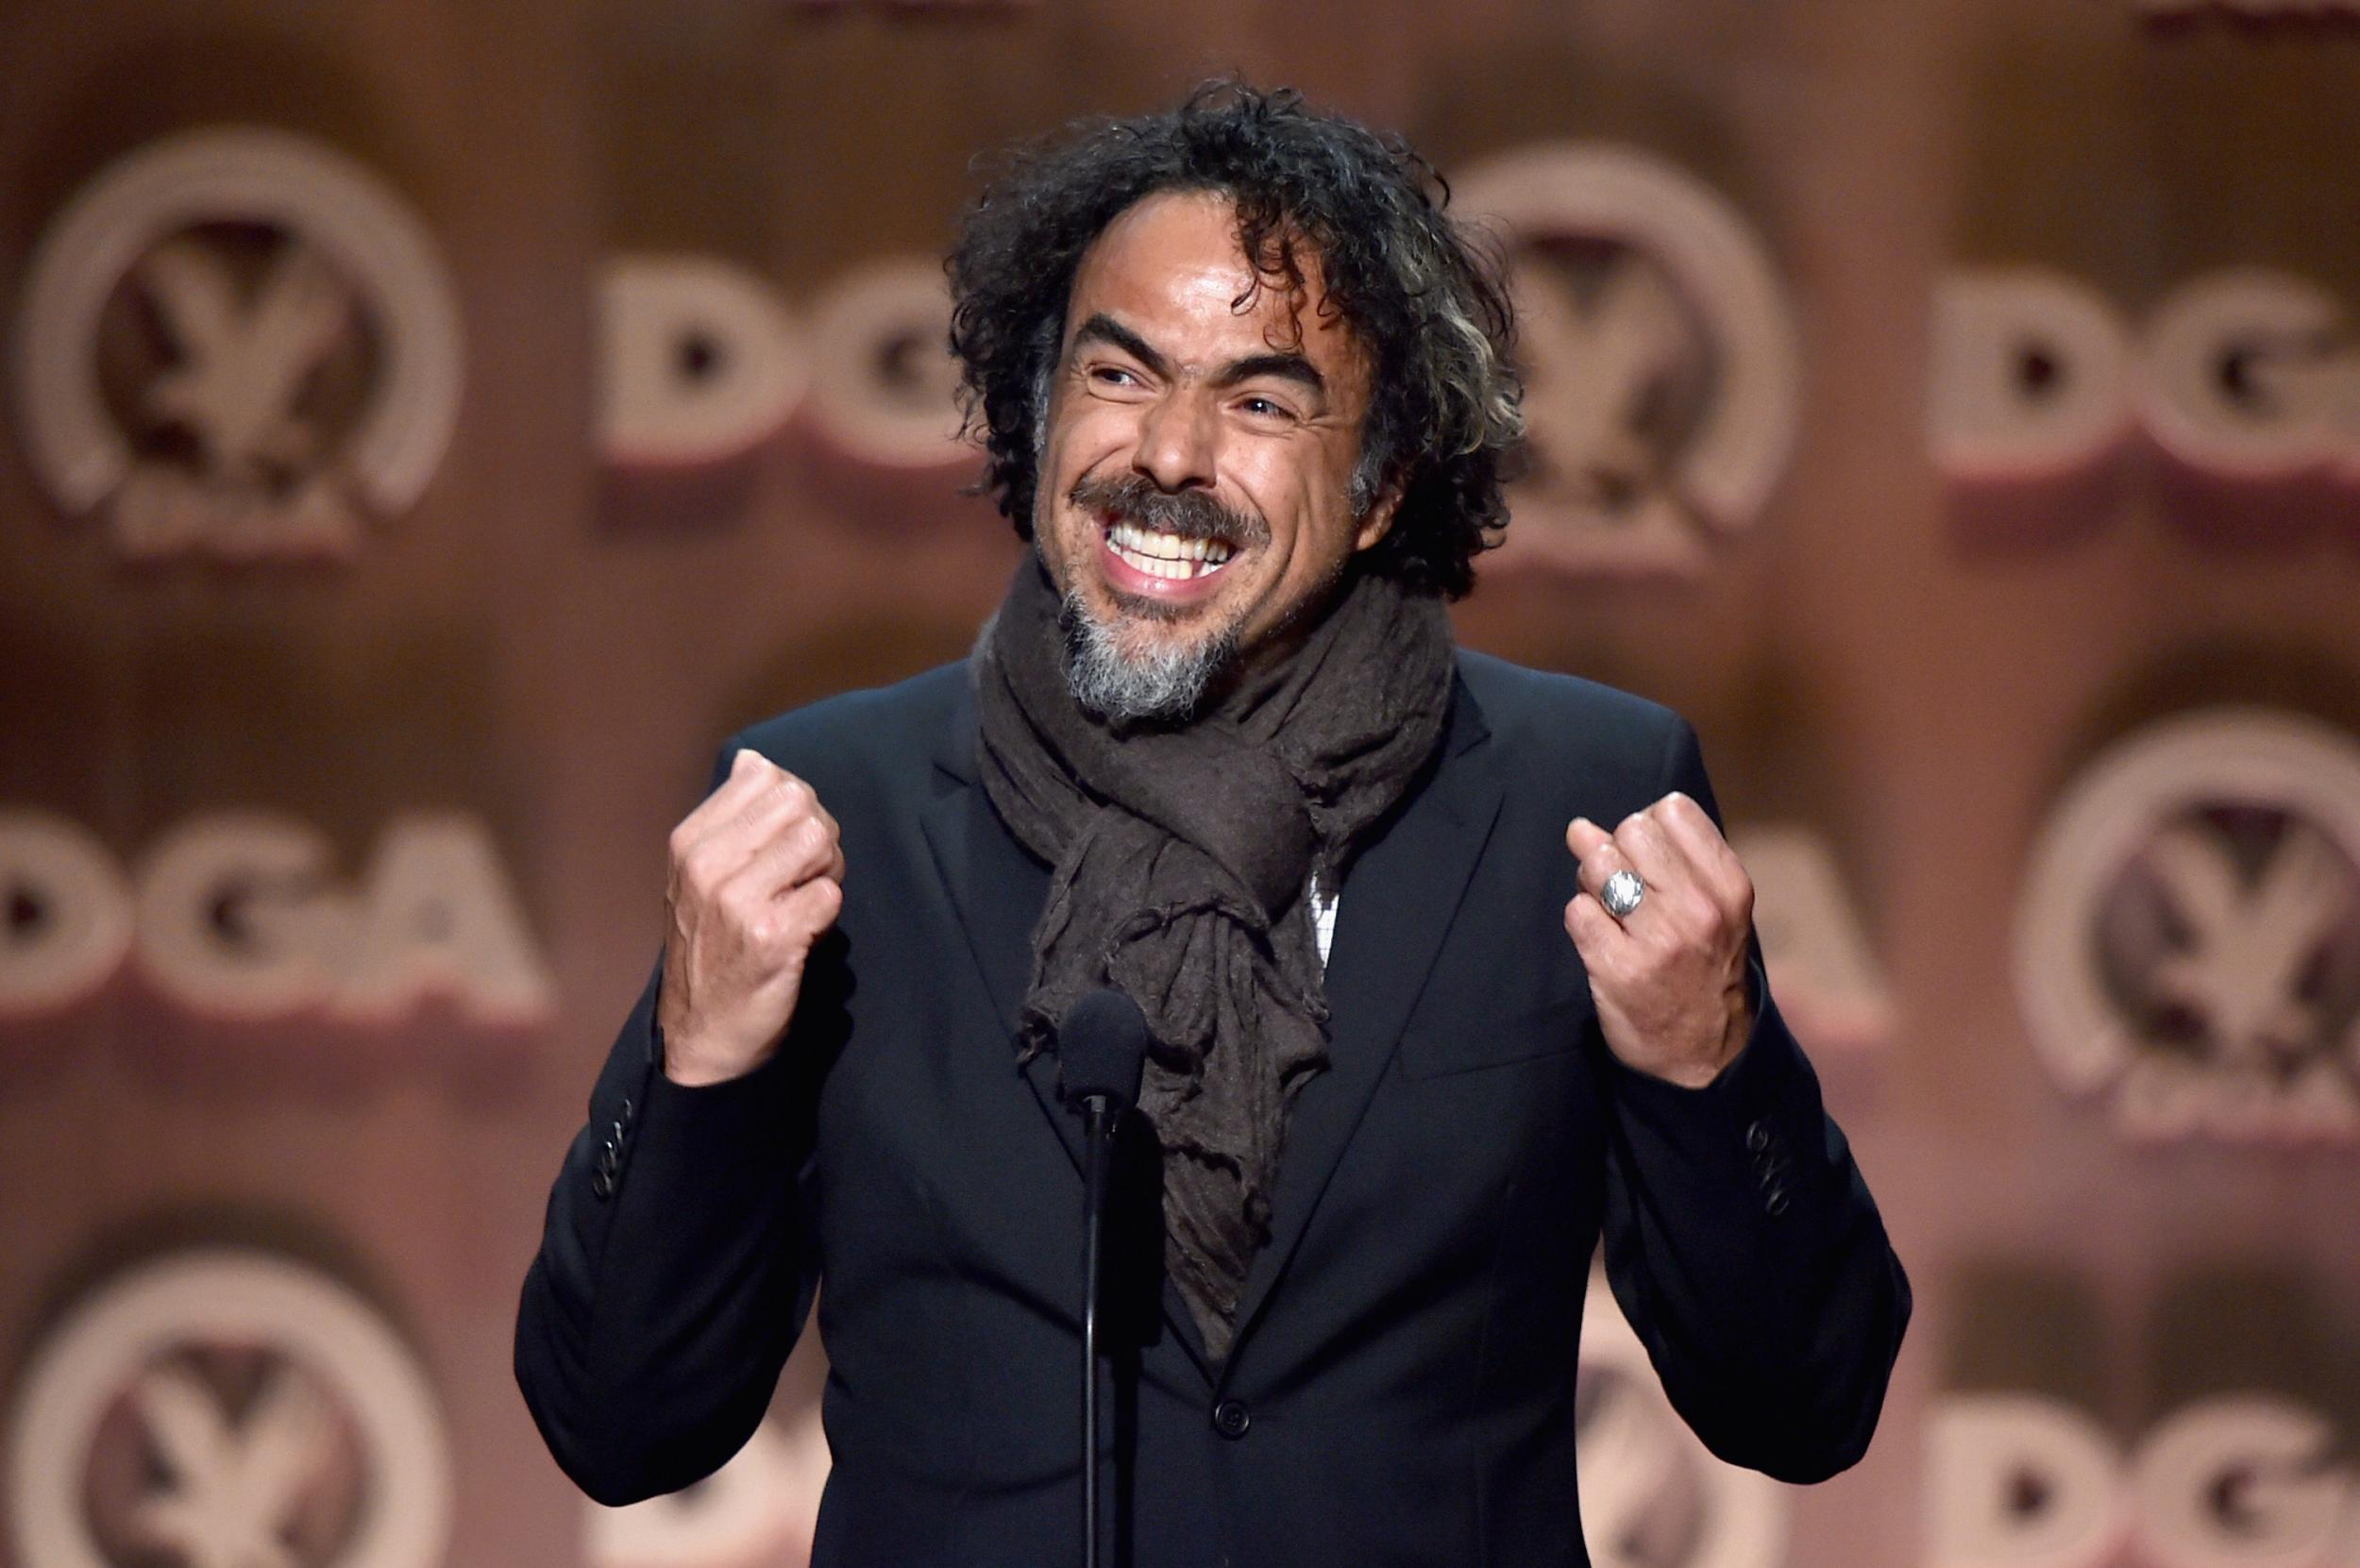 Alejandro Gonzales Inarritu winning a DGA award in 2015 for Birdman